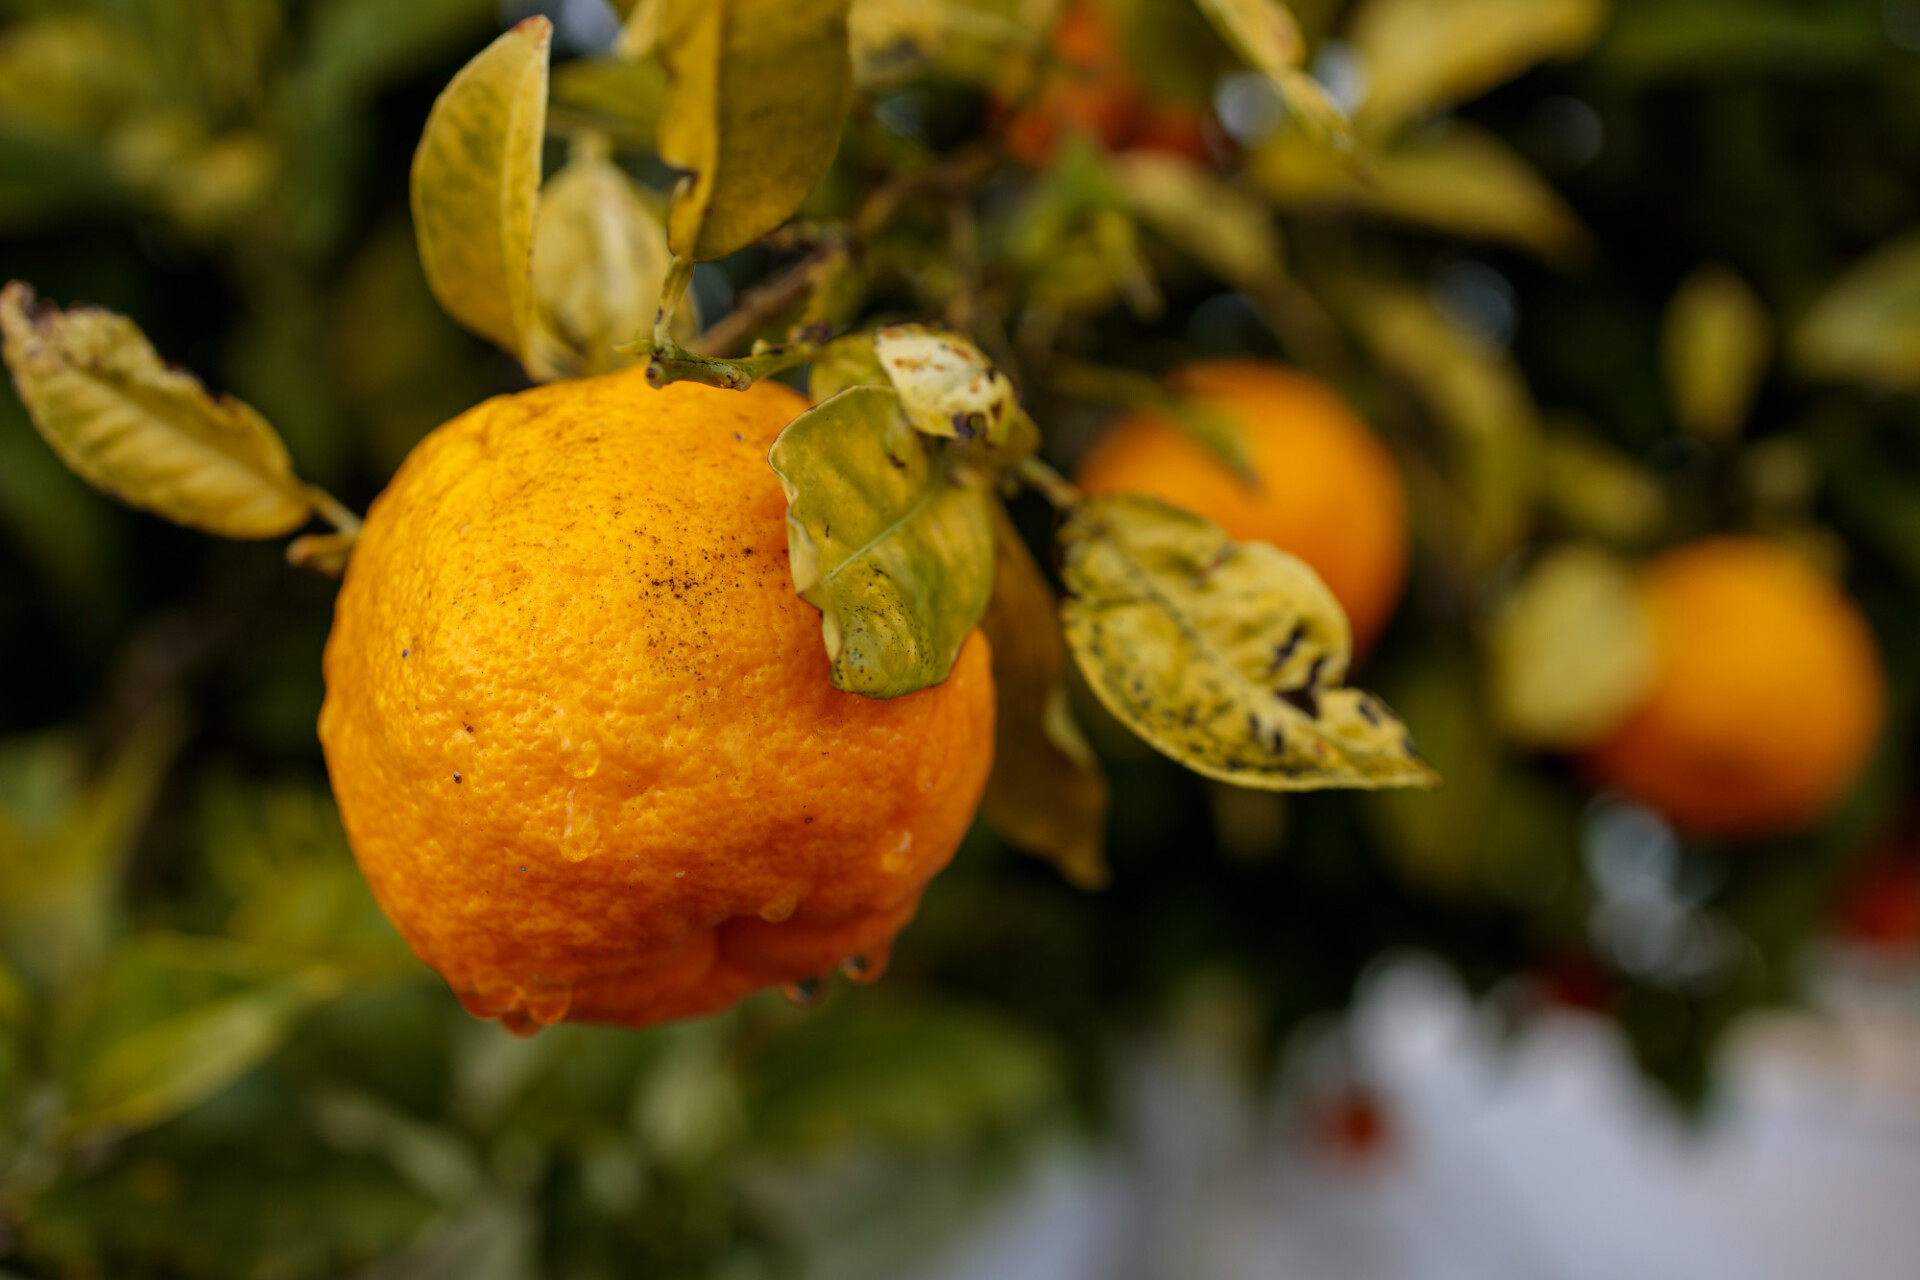 Large ripe orange on the tree